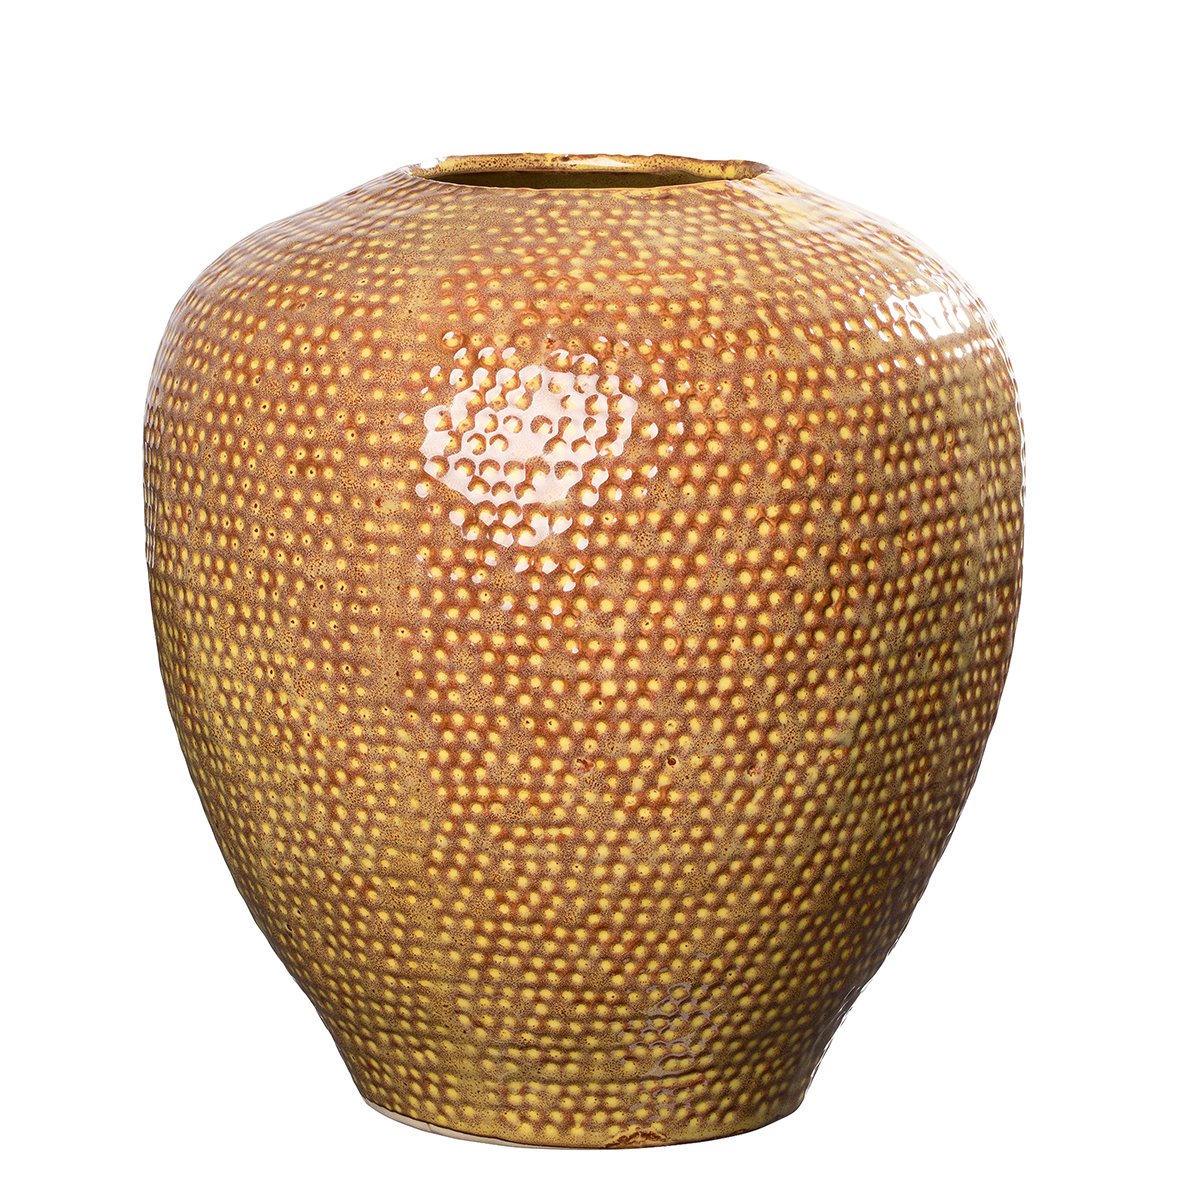 Håndlavet sennepsfarvet keramikvase, stor
H: 24,5 cm